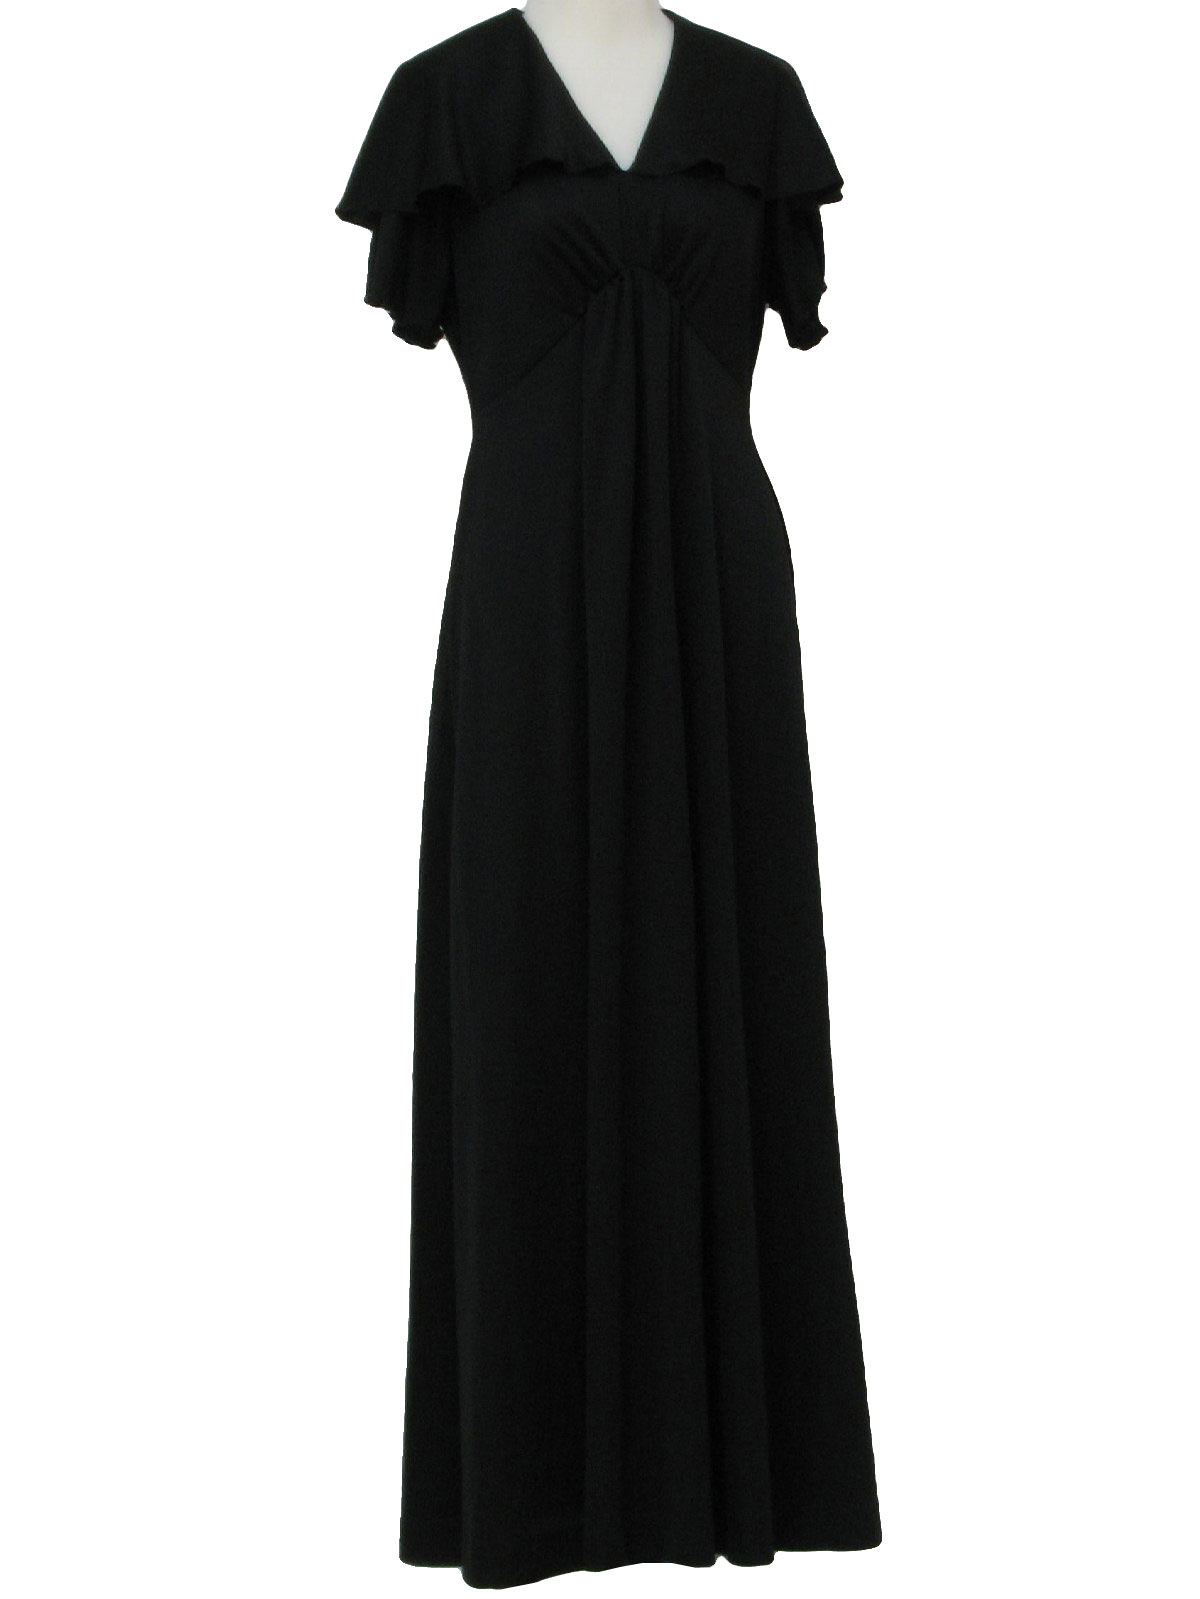 -Sears- Womens little black floor length double knit polyester dress ...